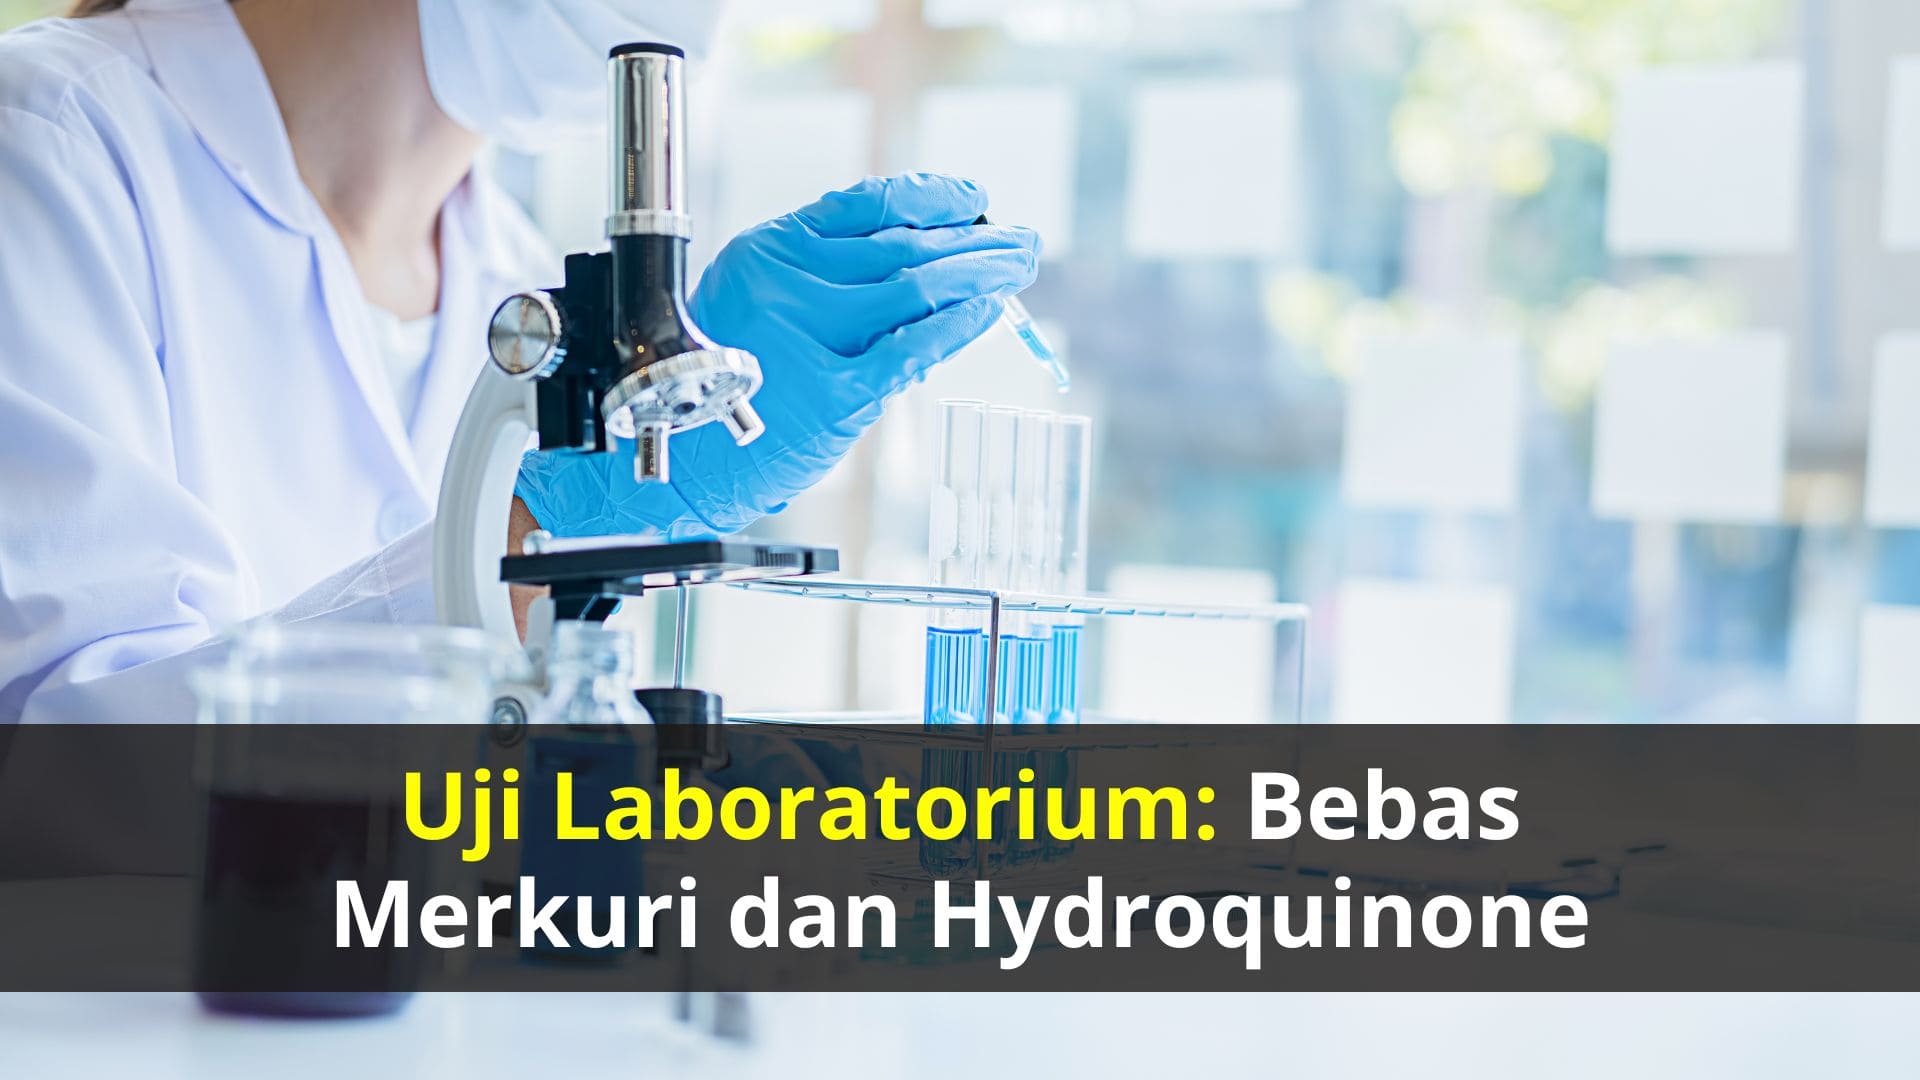 Uji Laboratorium: Bebas Merkuri dan Hydroquinone